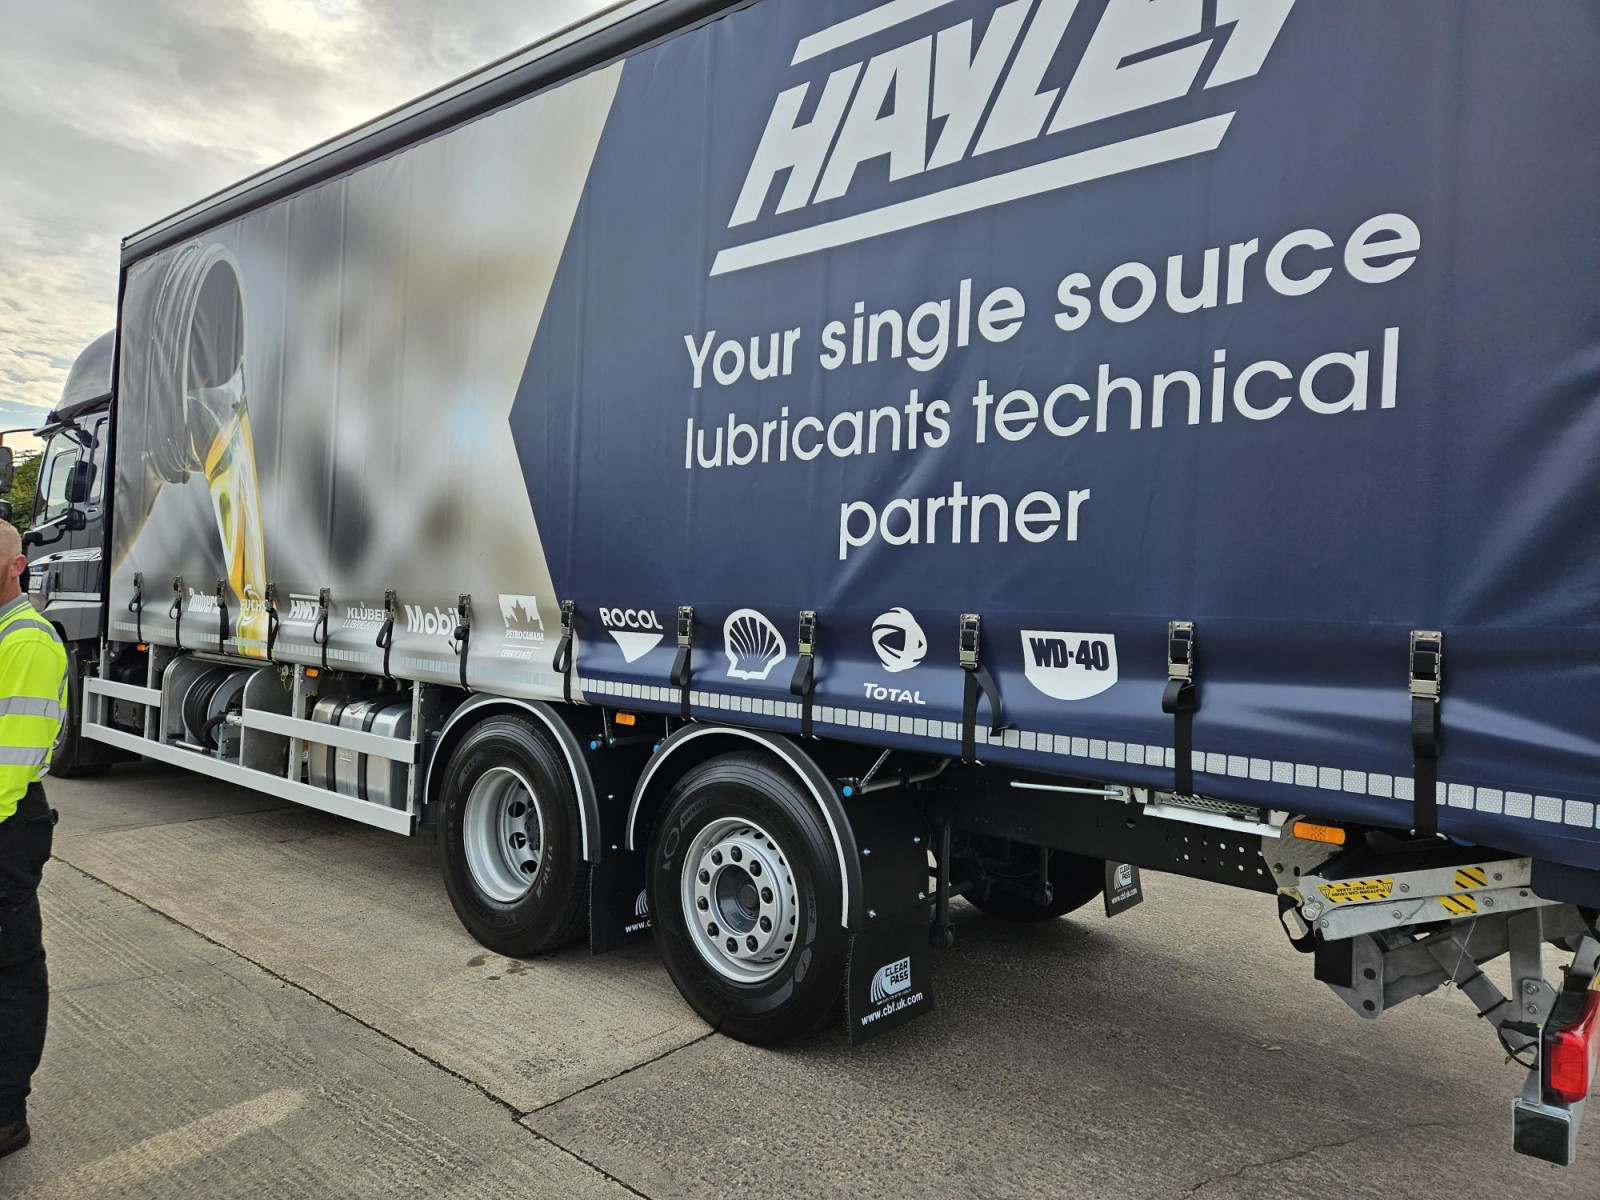 Hayley’s New Specialist Lubricants Truck